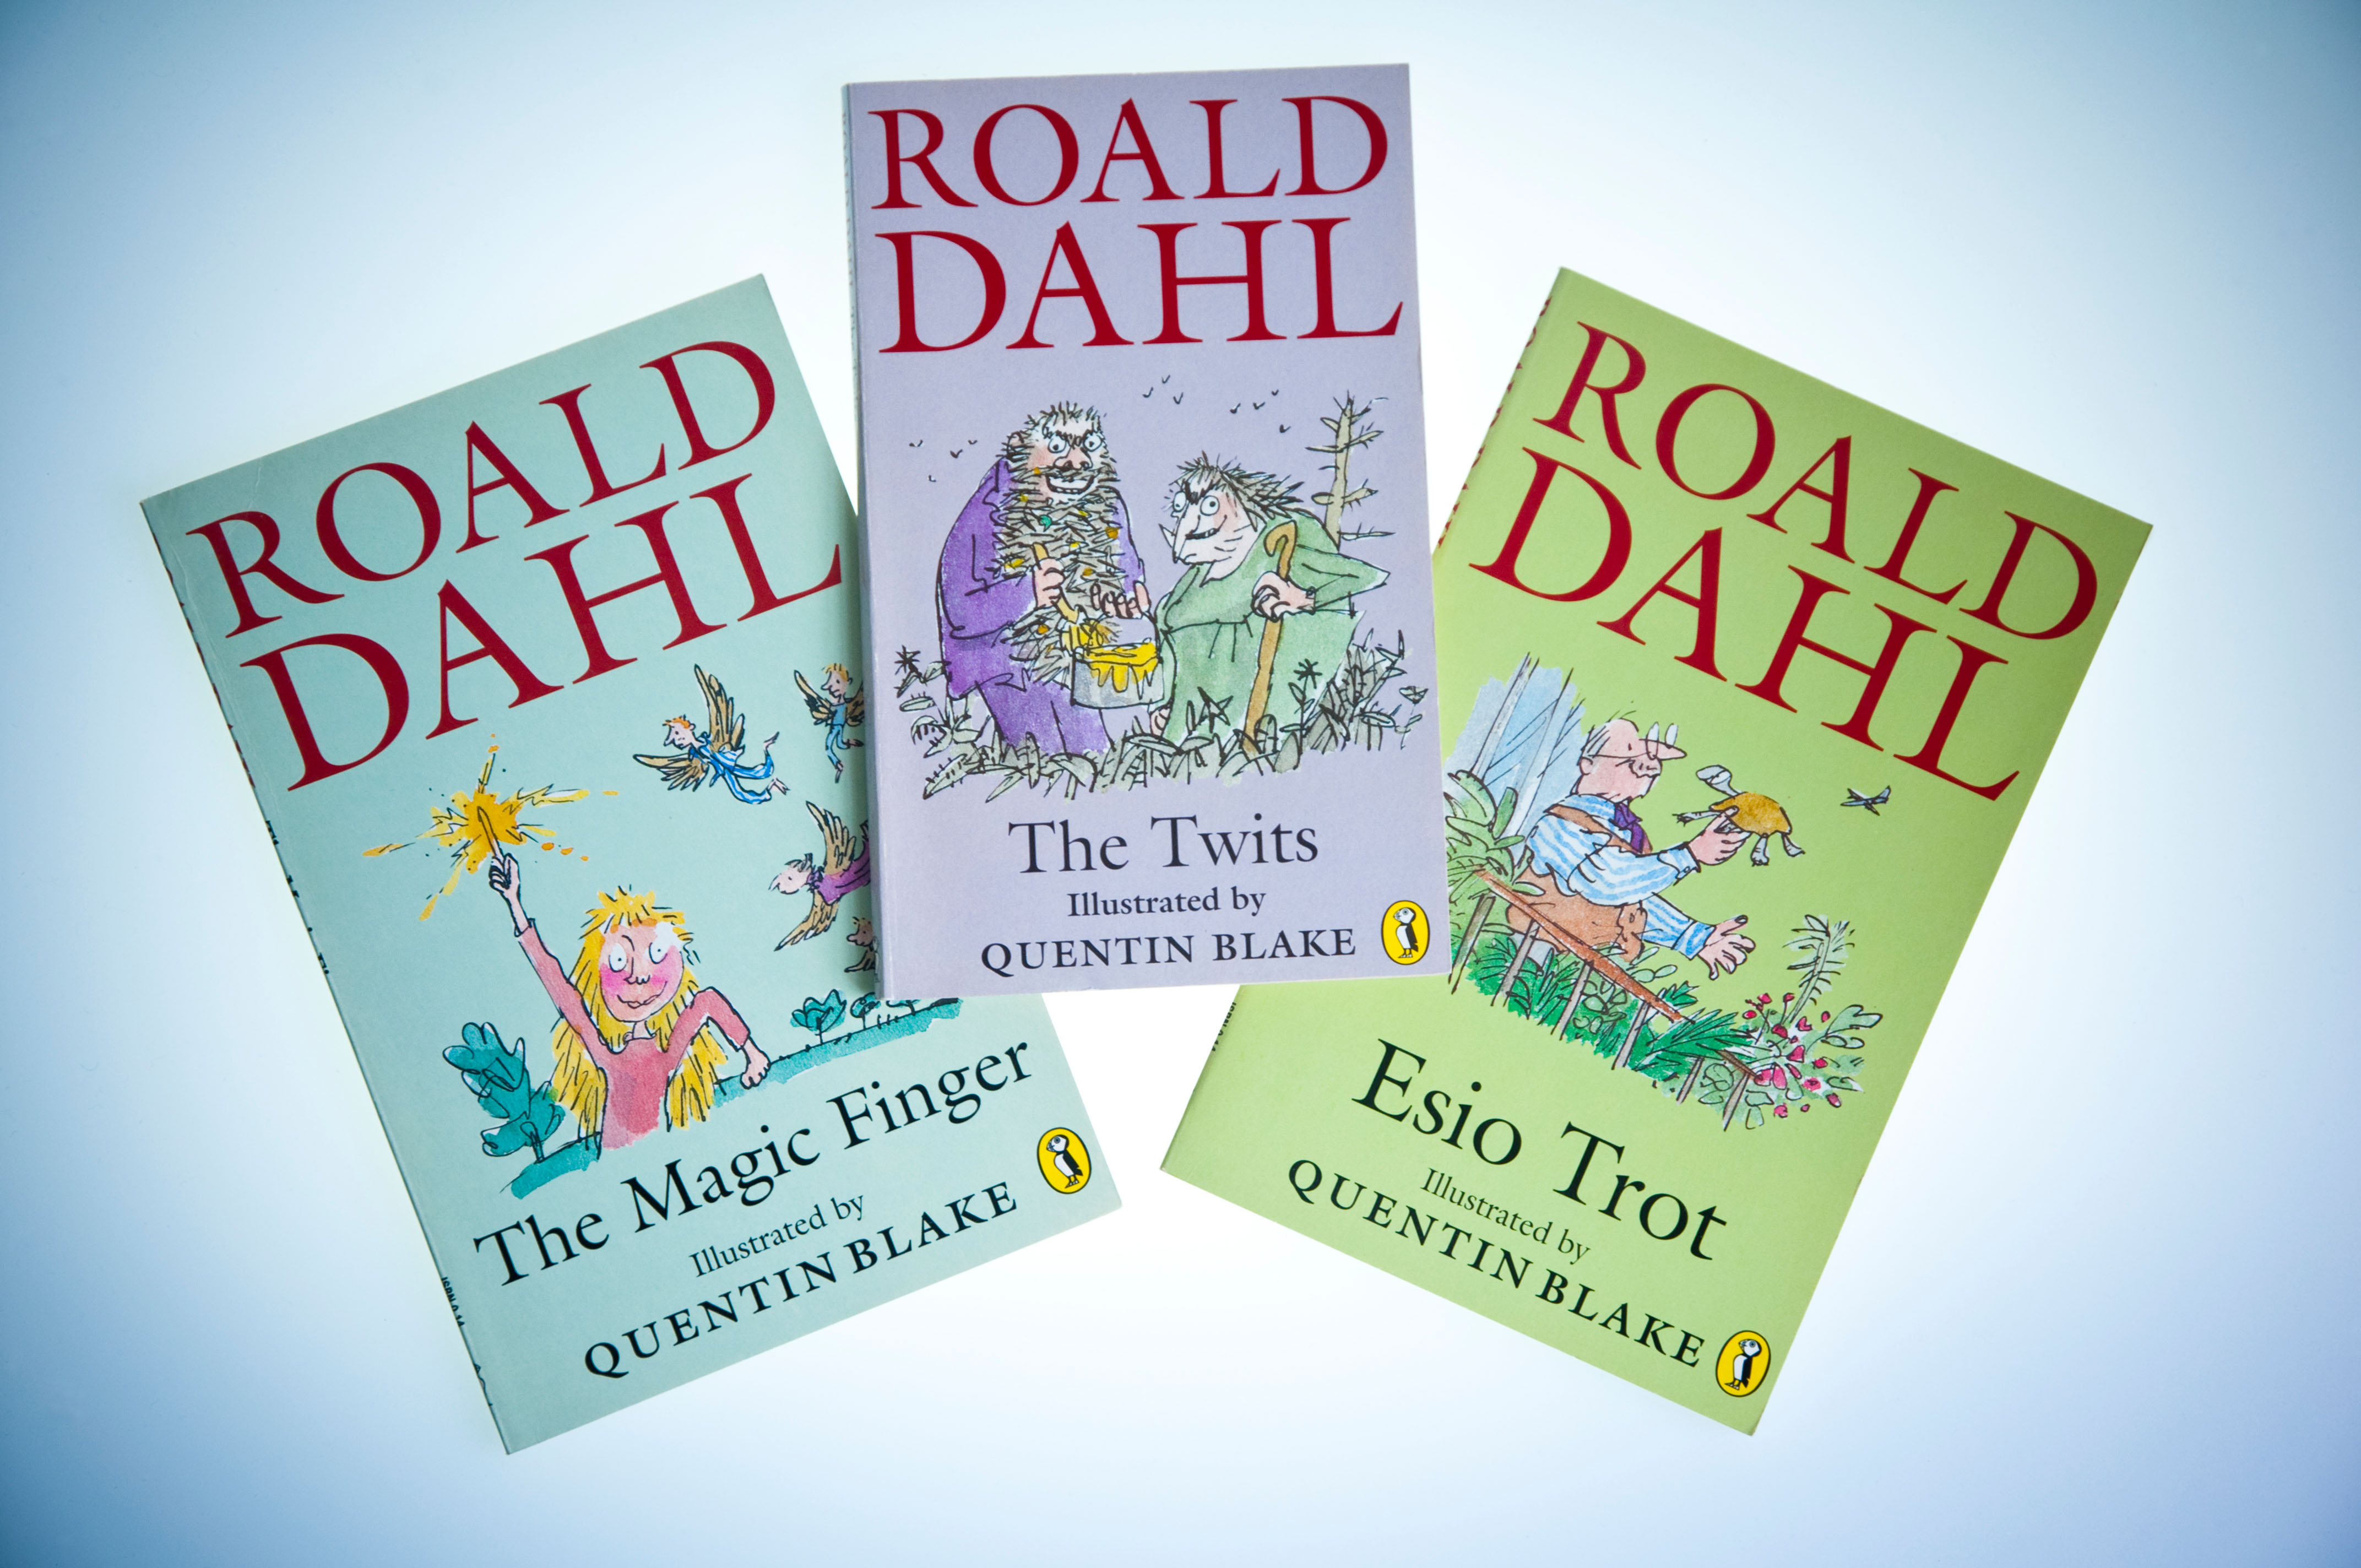 Roald Dahl's Books Rewritten To Remove Offensive Language